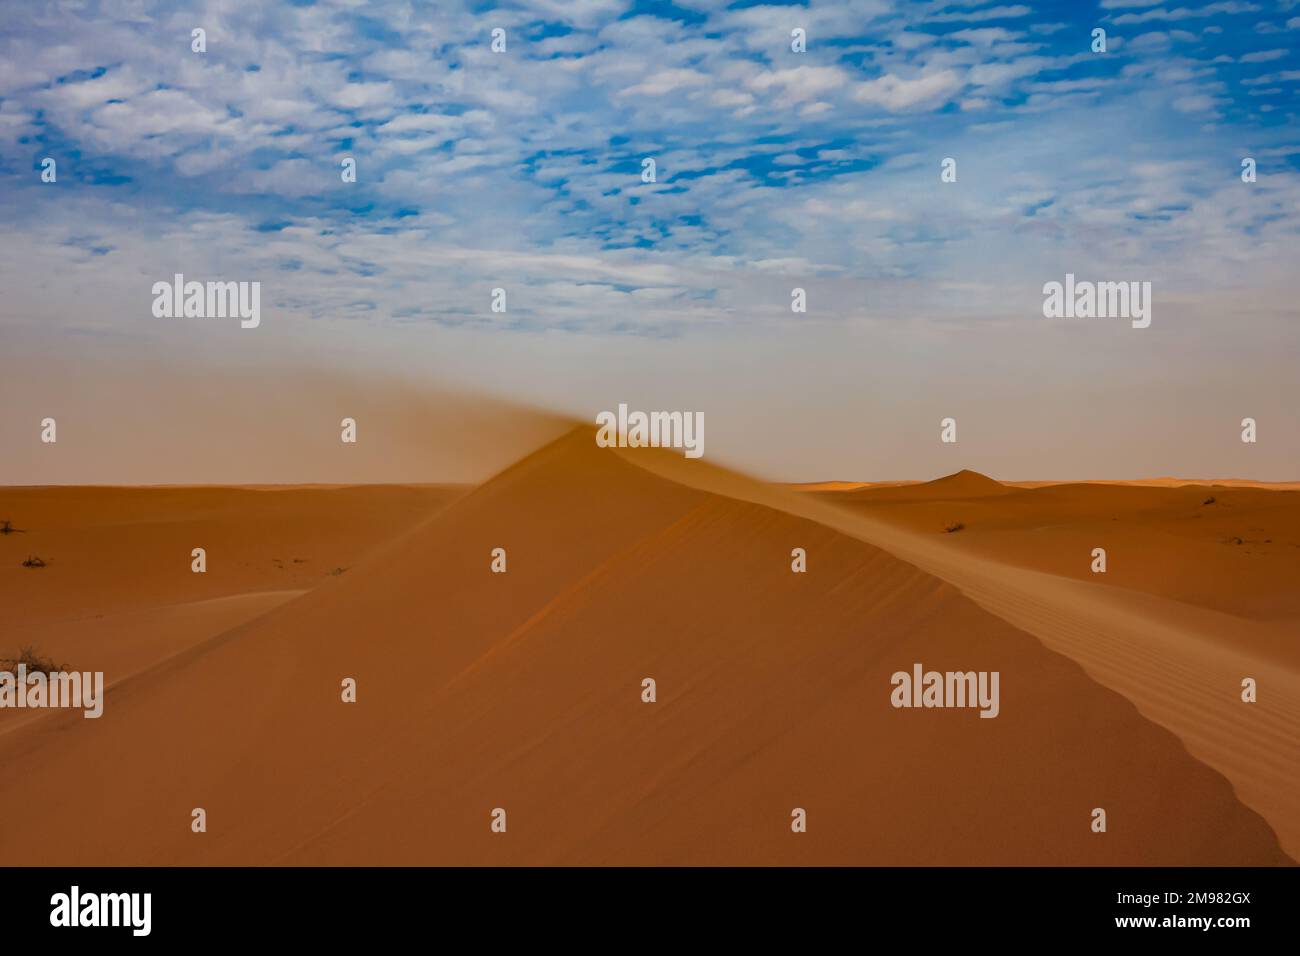 Sand blowing off the ridge of a sand dune in the desert, Saudi Arabia Stock Photo